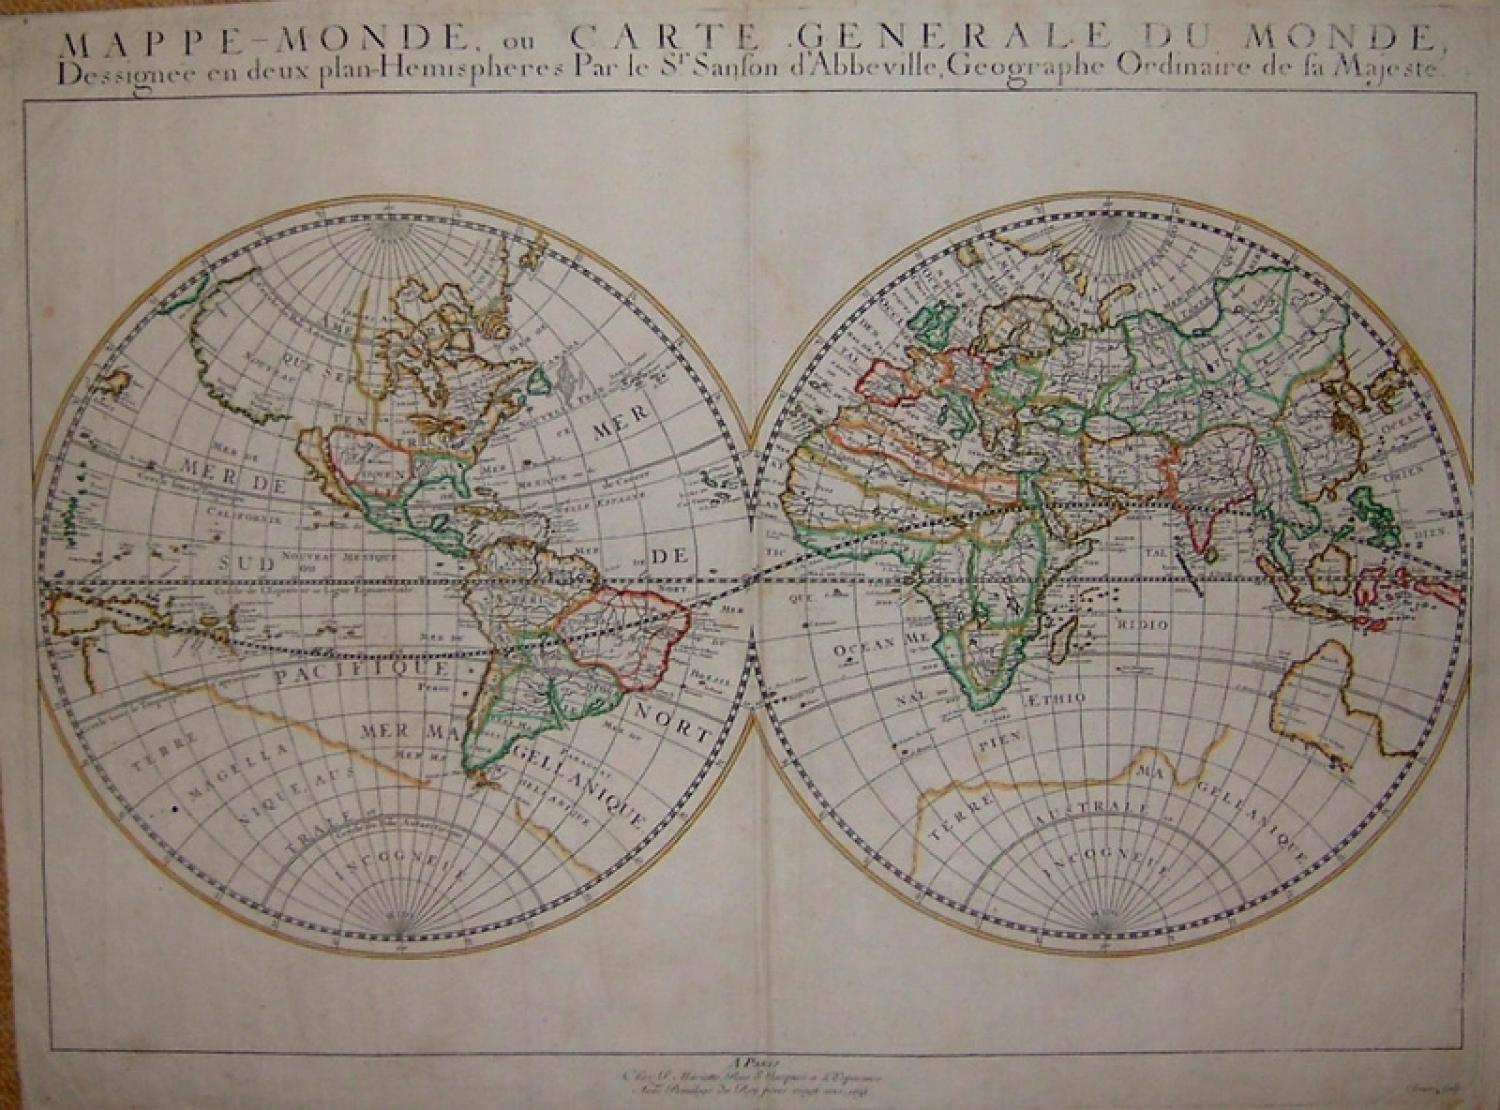 SOLD Mappe-Monde, ou Carte Generale Du Monde Dessignee en deux plan - Hemispheres